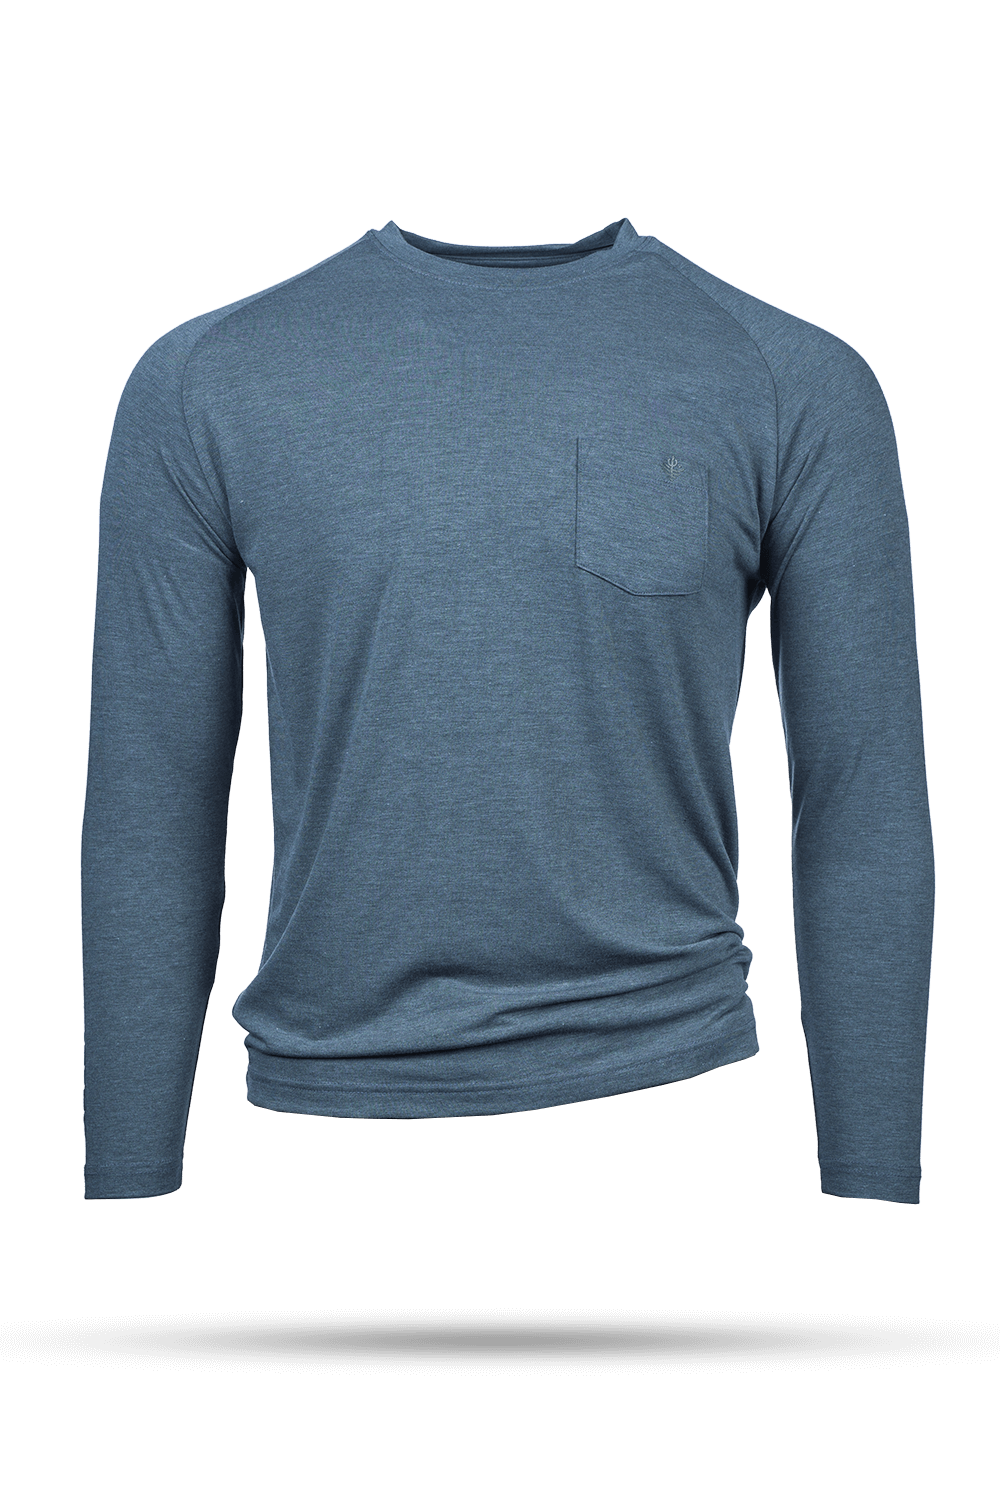 SFG Performance Tri-blend Shirt - Nine Line Apparel